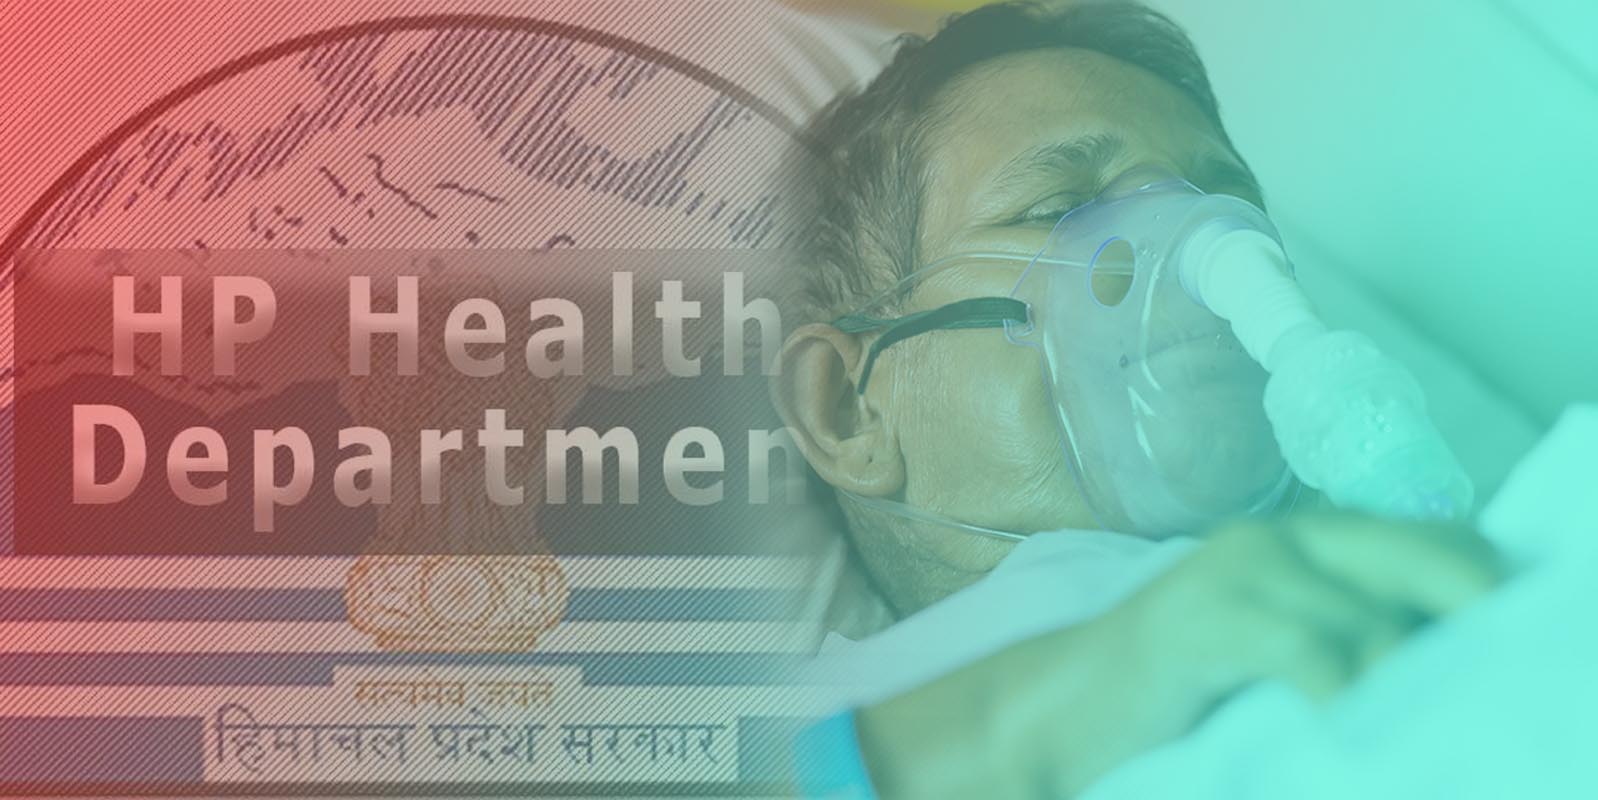 Himachal Pradesh Health Department Ventilator purchase